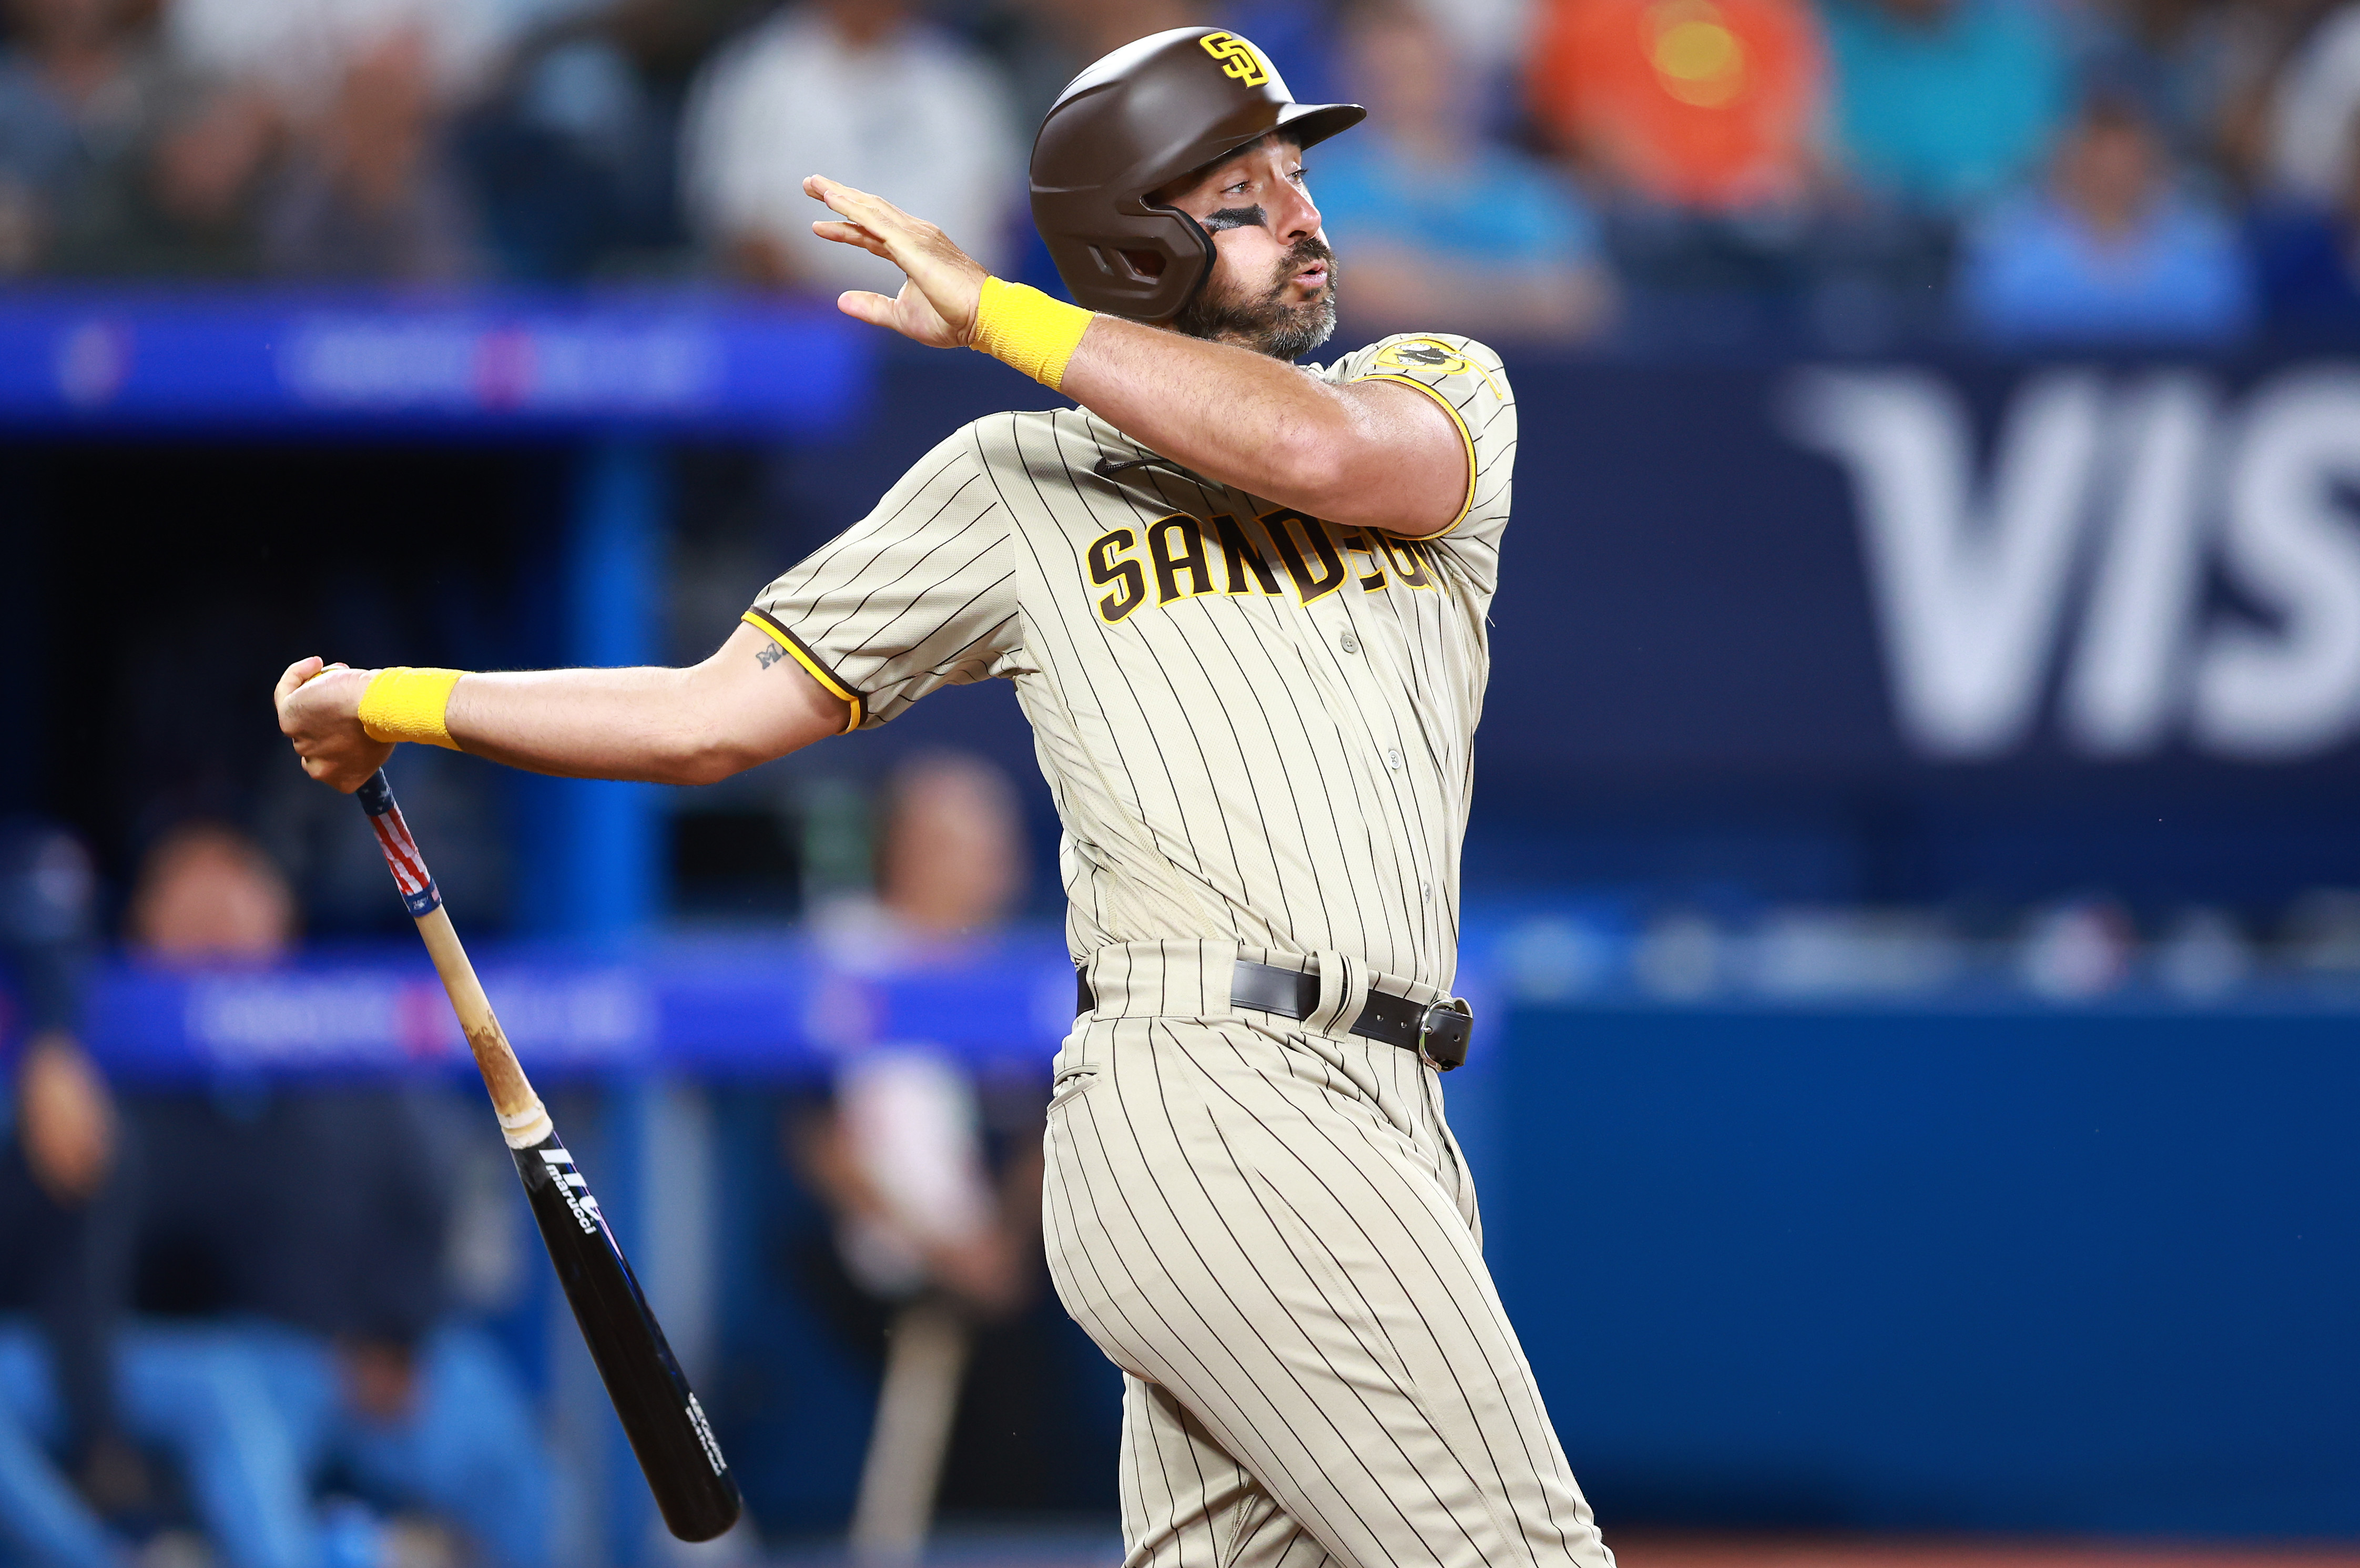 Fernando Tatis Jr. is the 'Face of Baseball' – but MLB pushes for more